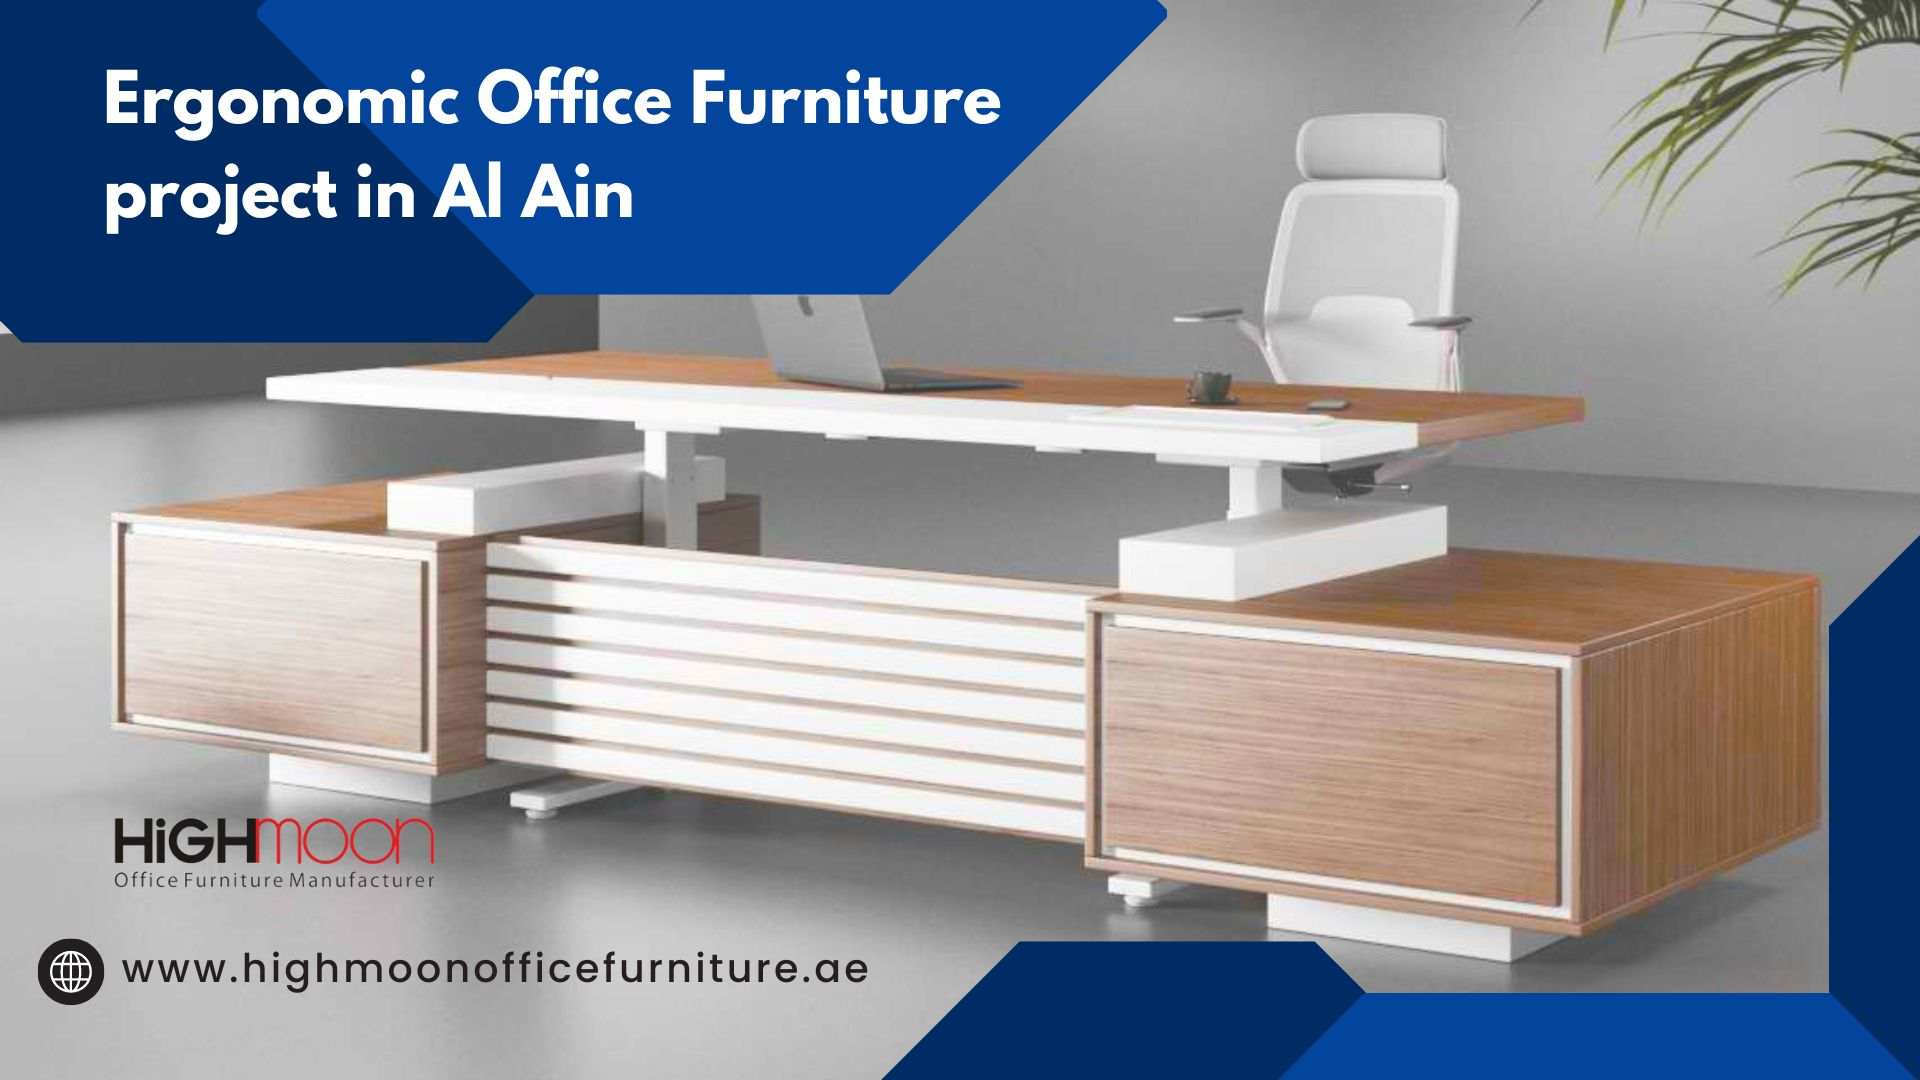 Ergonomic Office Furniture project in Al Ain